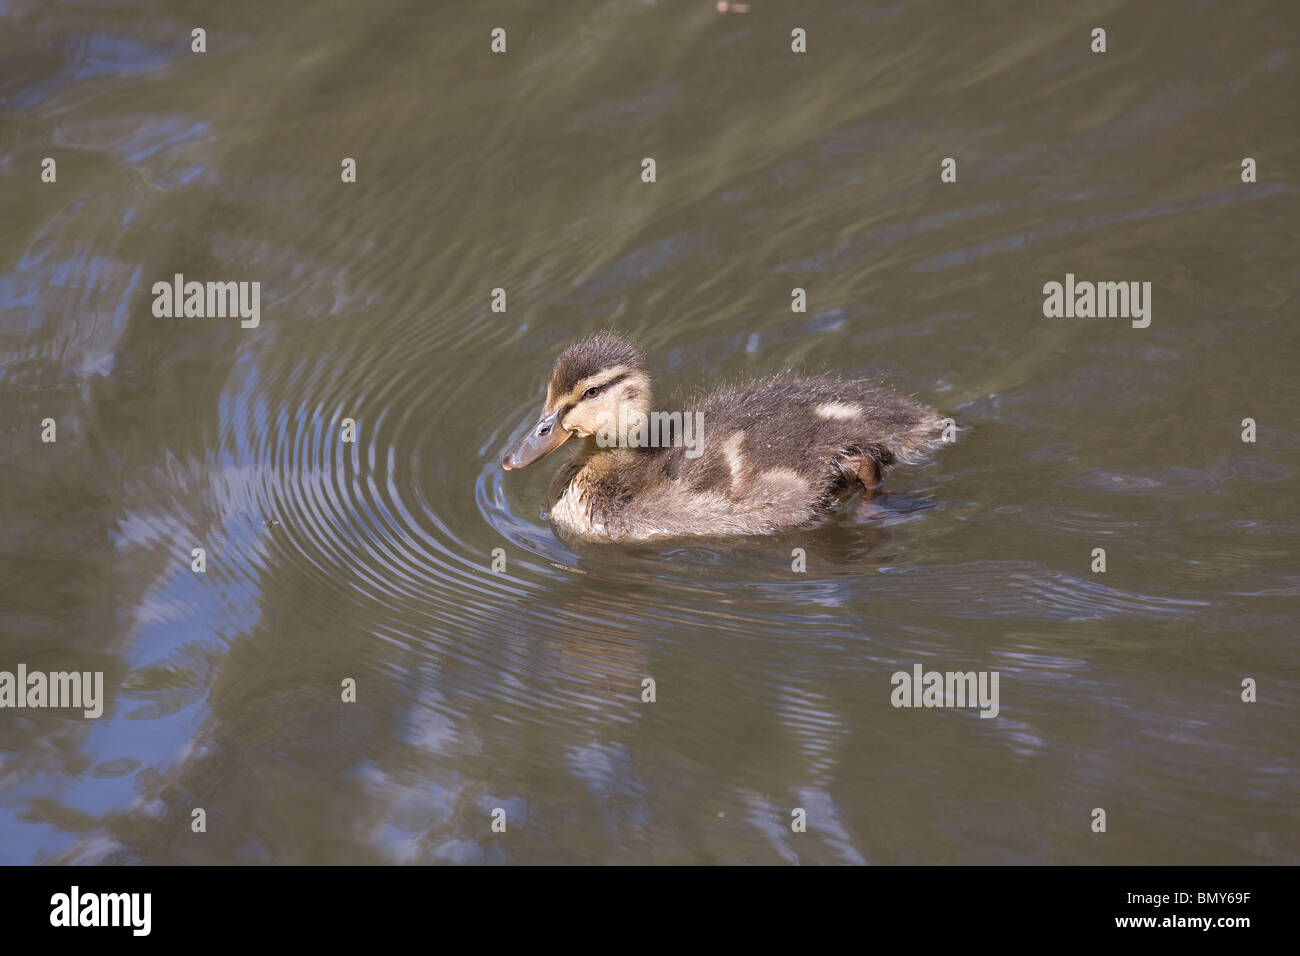 A Mallard duckling swimming on a pond. Stock Photo